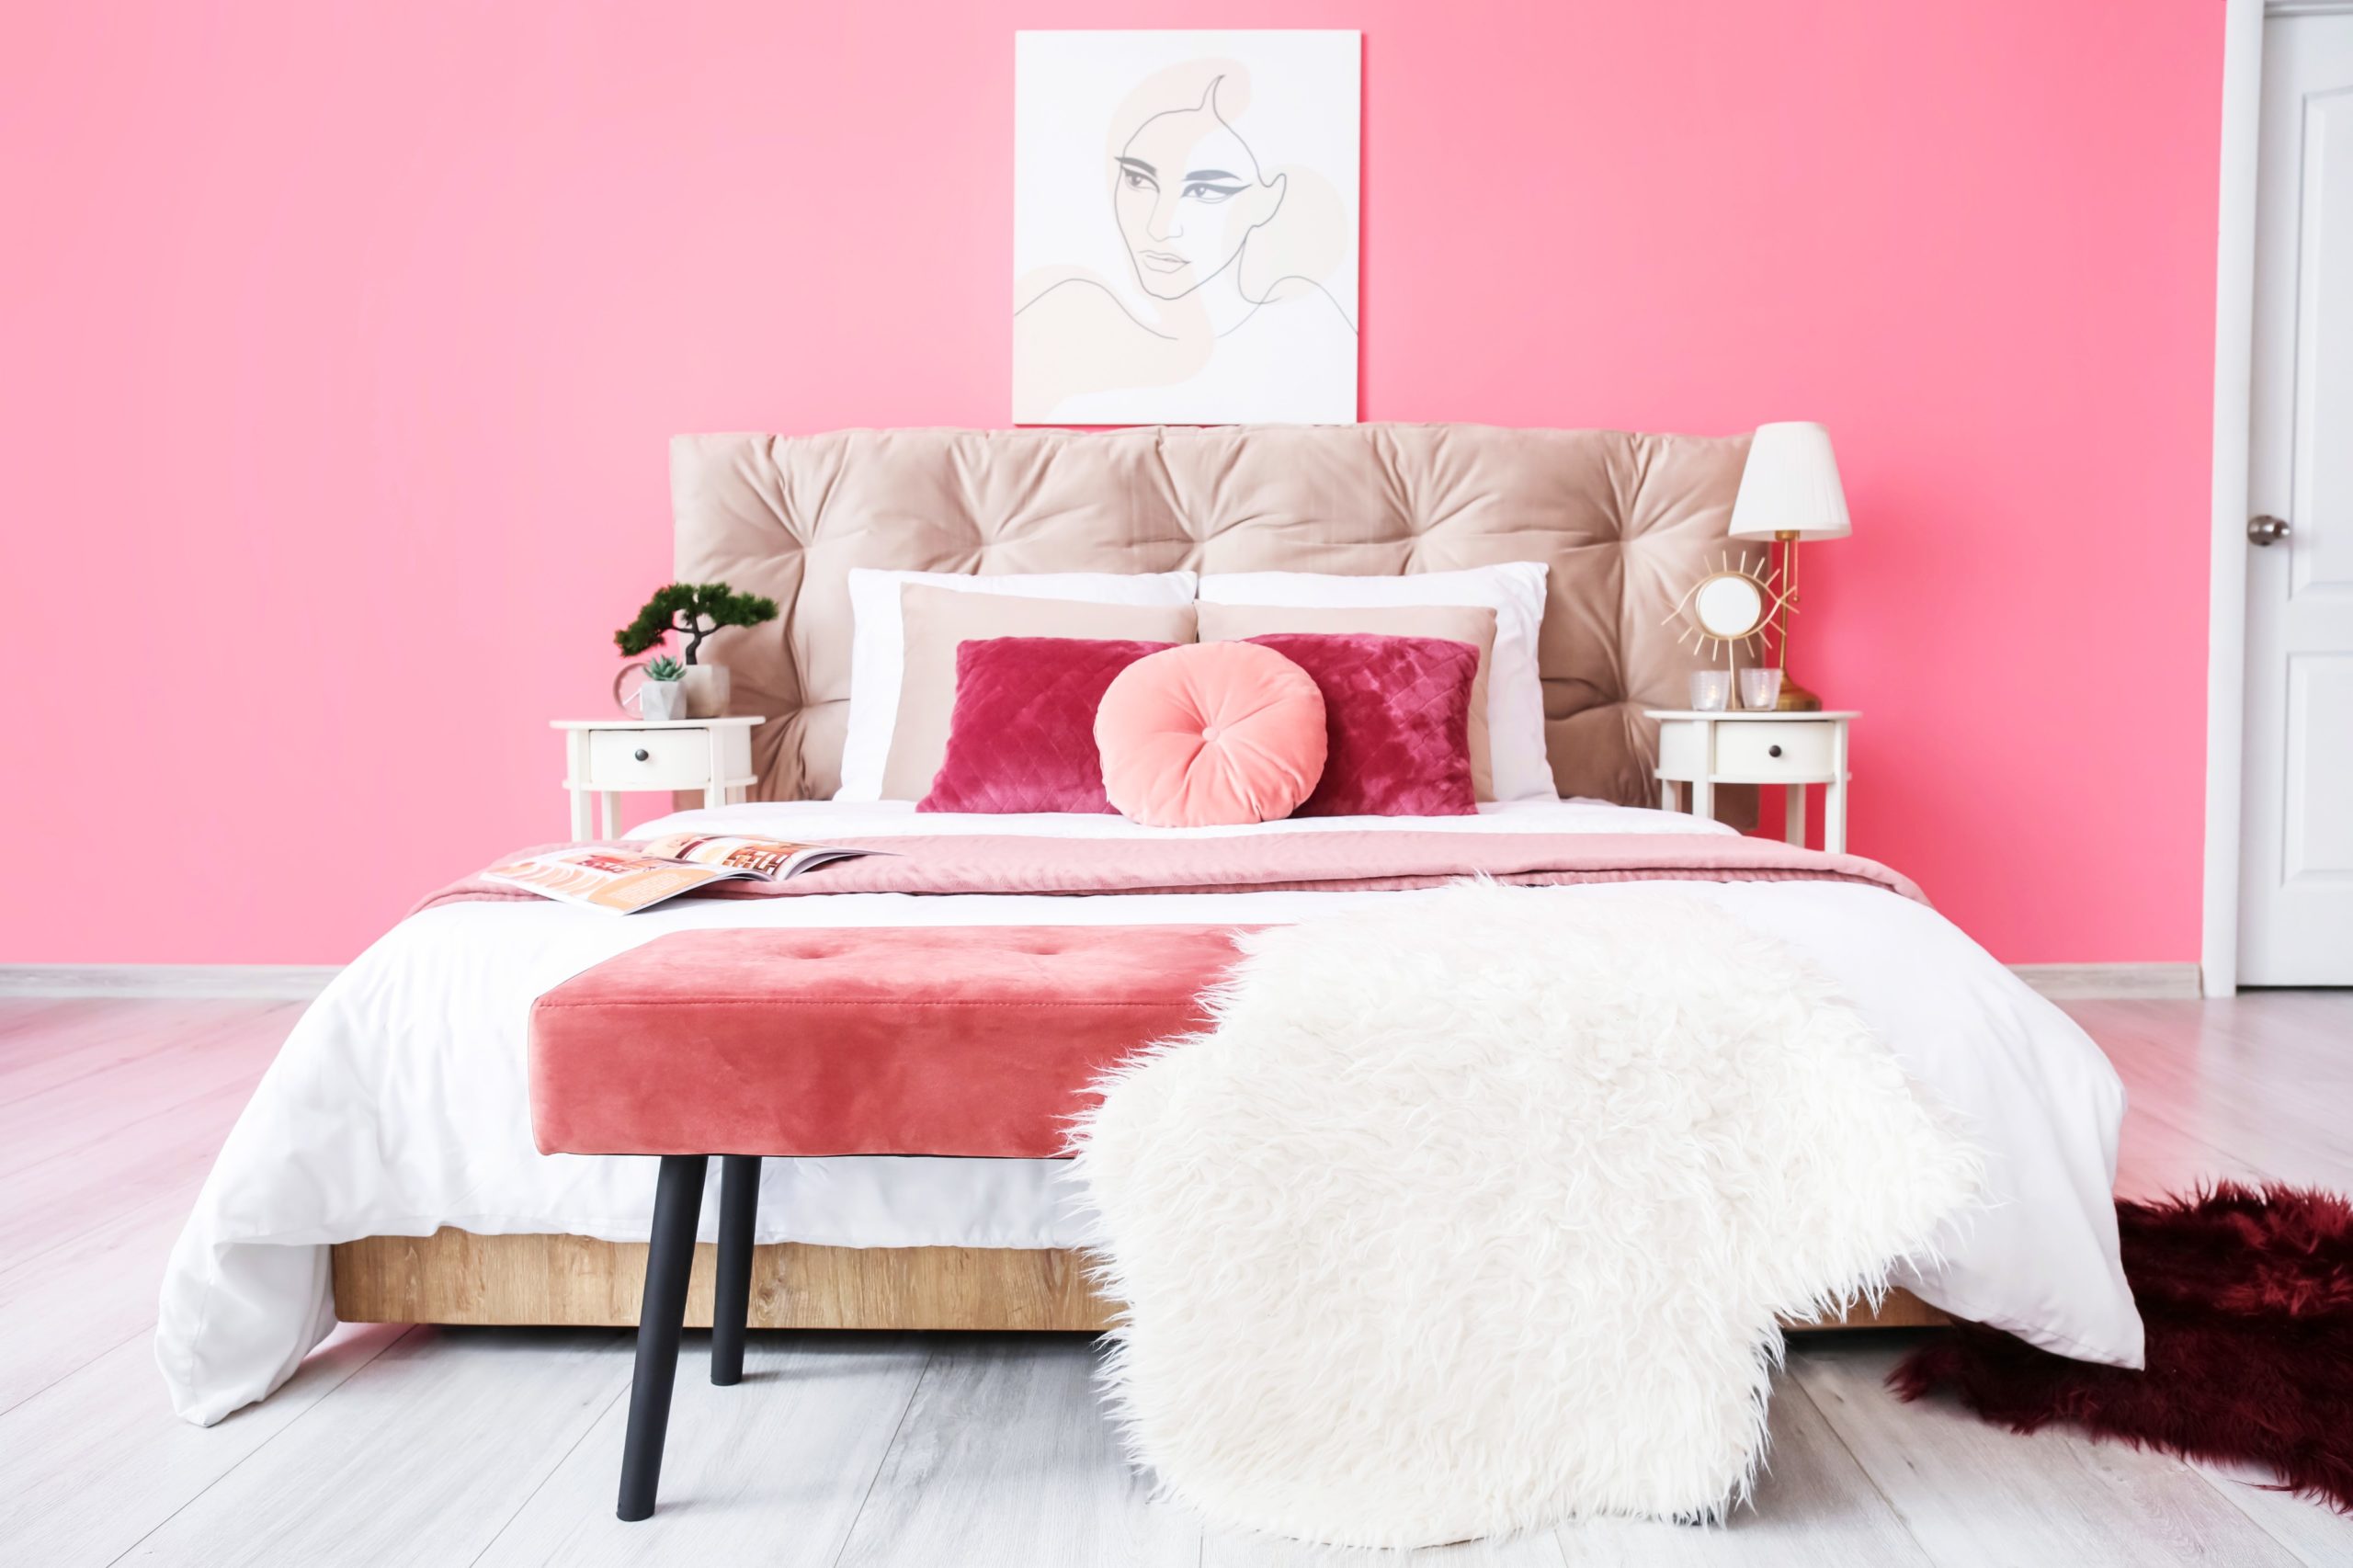 <img src="barbie.jpg" alt="barbie pink elegant adult bedroom"/> 